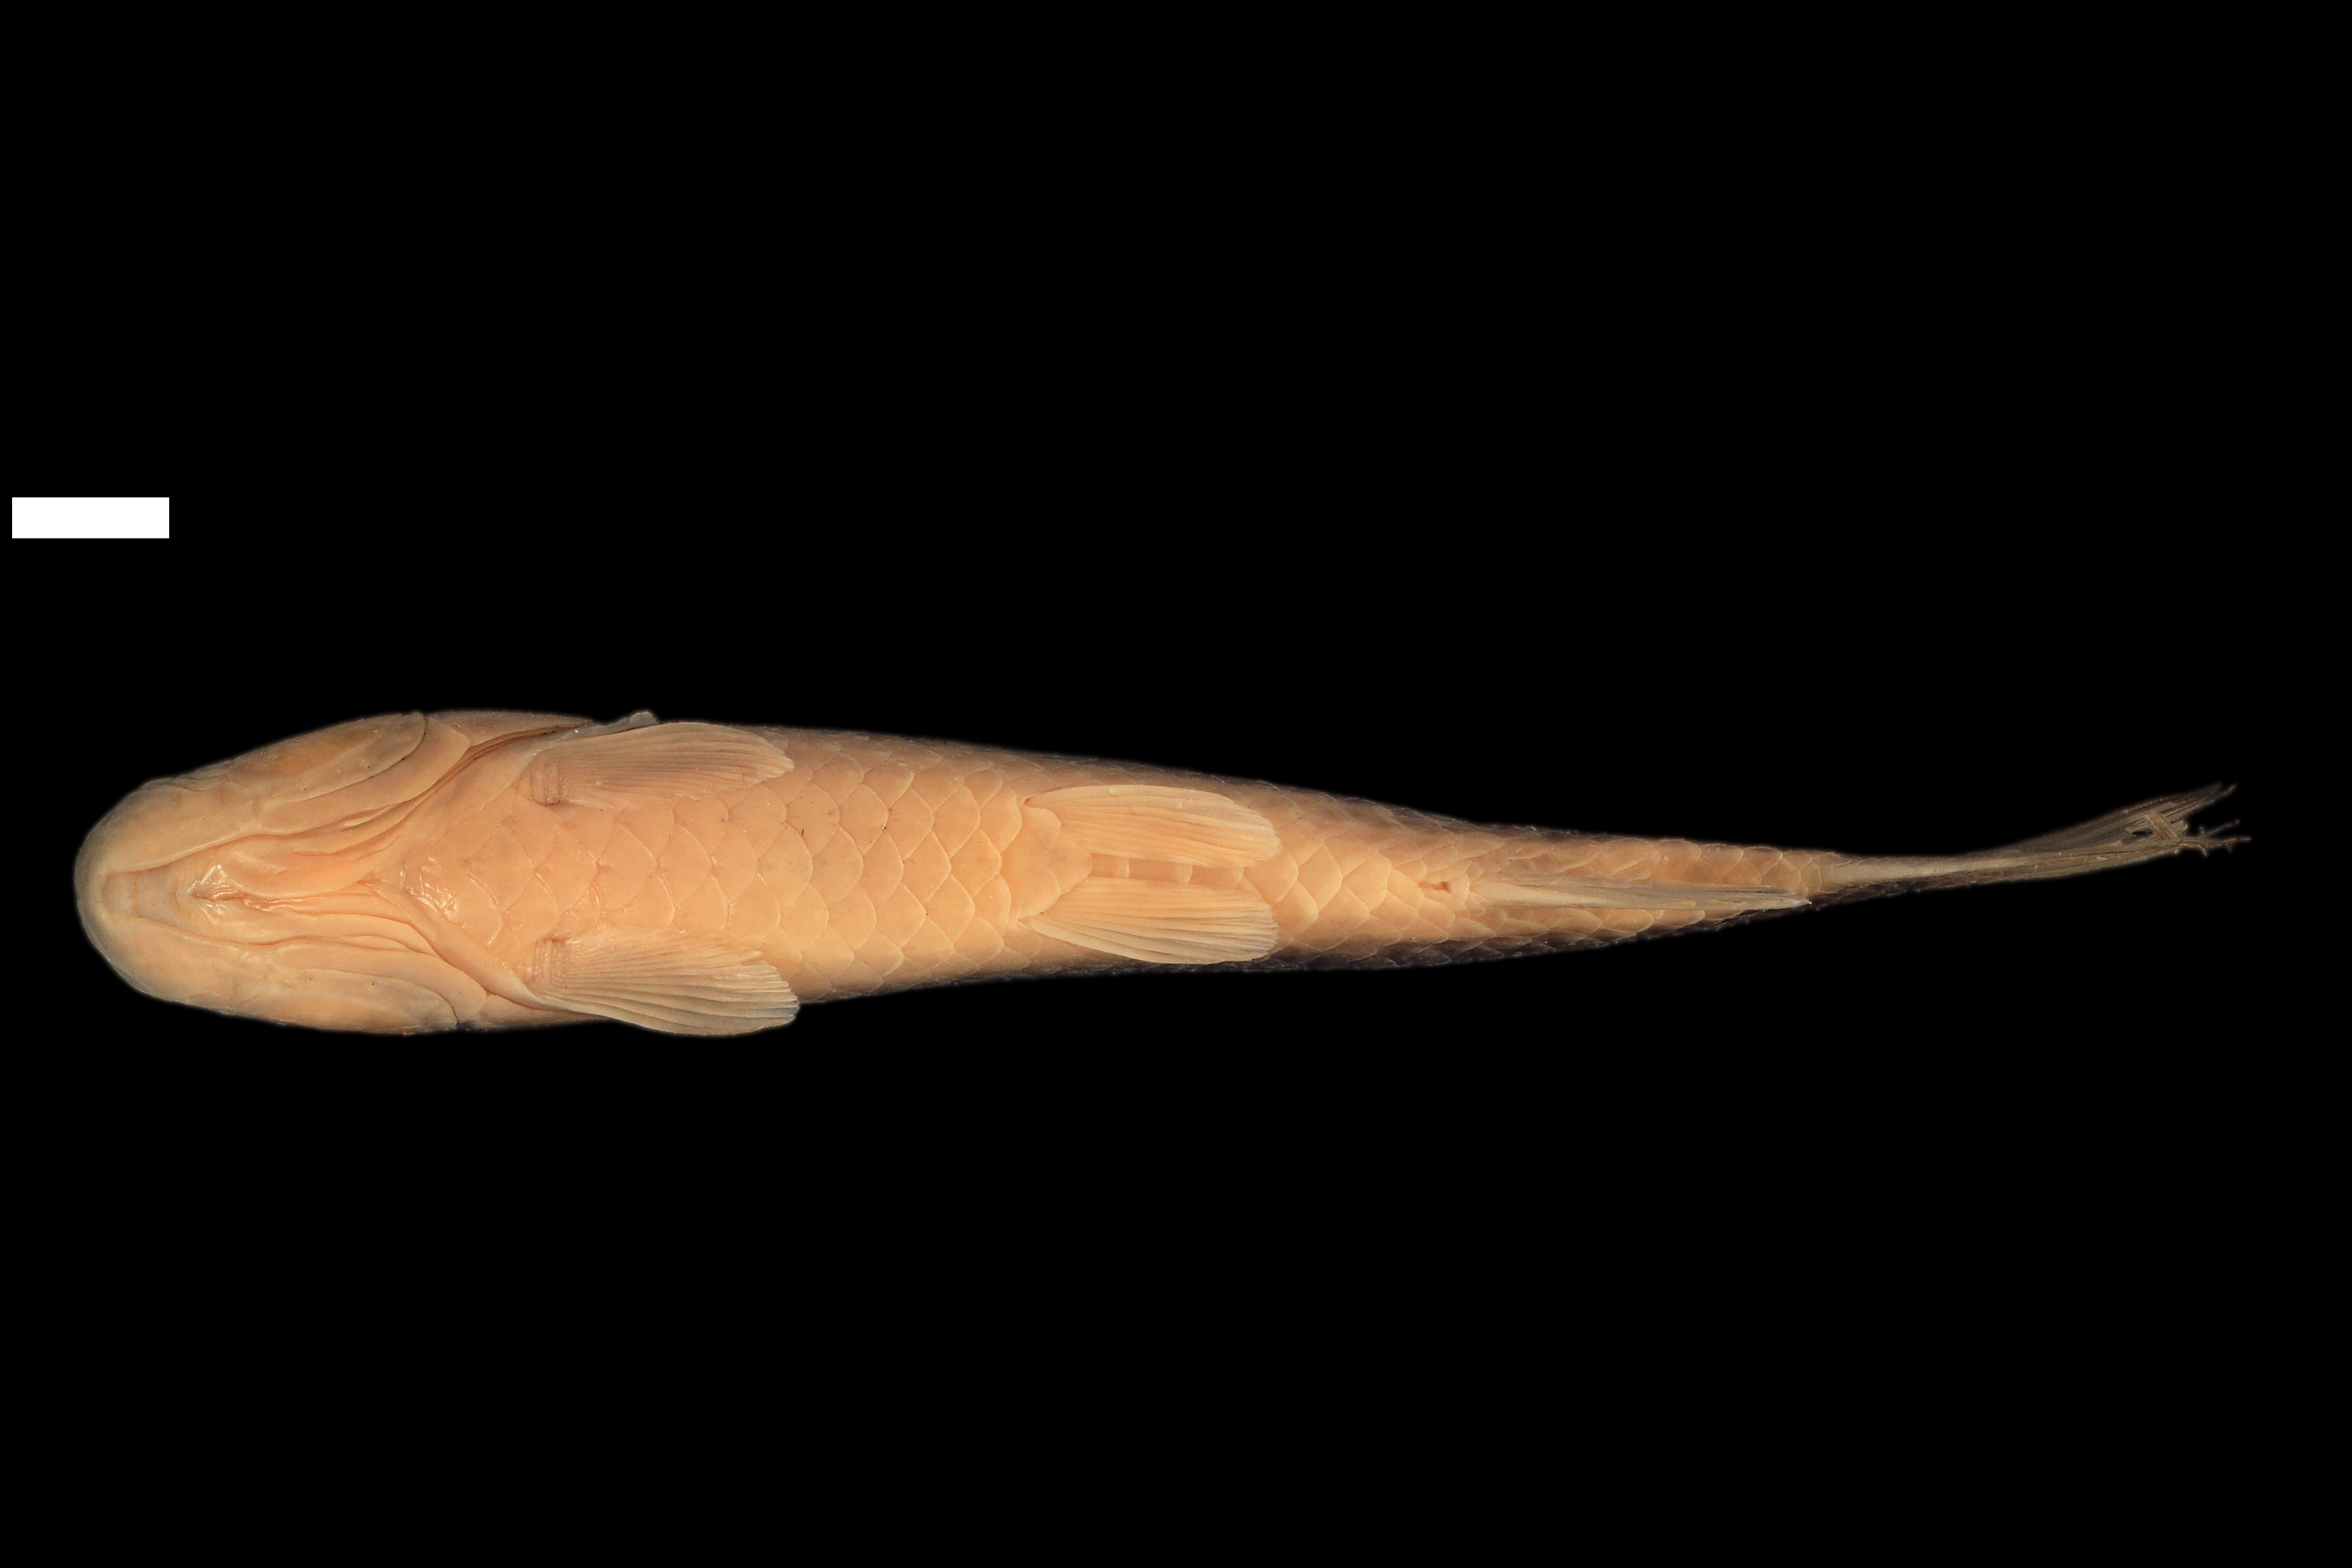 Paratype of <em>Lebiasina ortegai</em>, IAvH-P-9875_Ventral, 116.4 mm SL (scale bar = 1 cm). Photograph by J. E. García-Melo